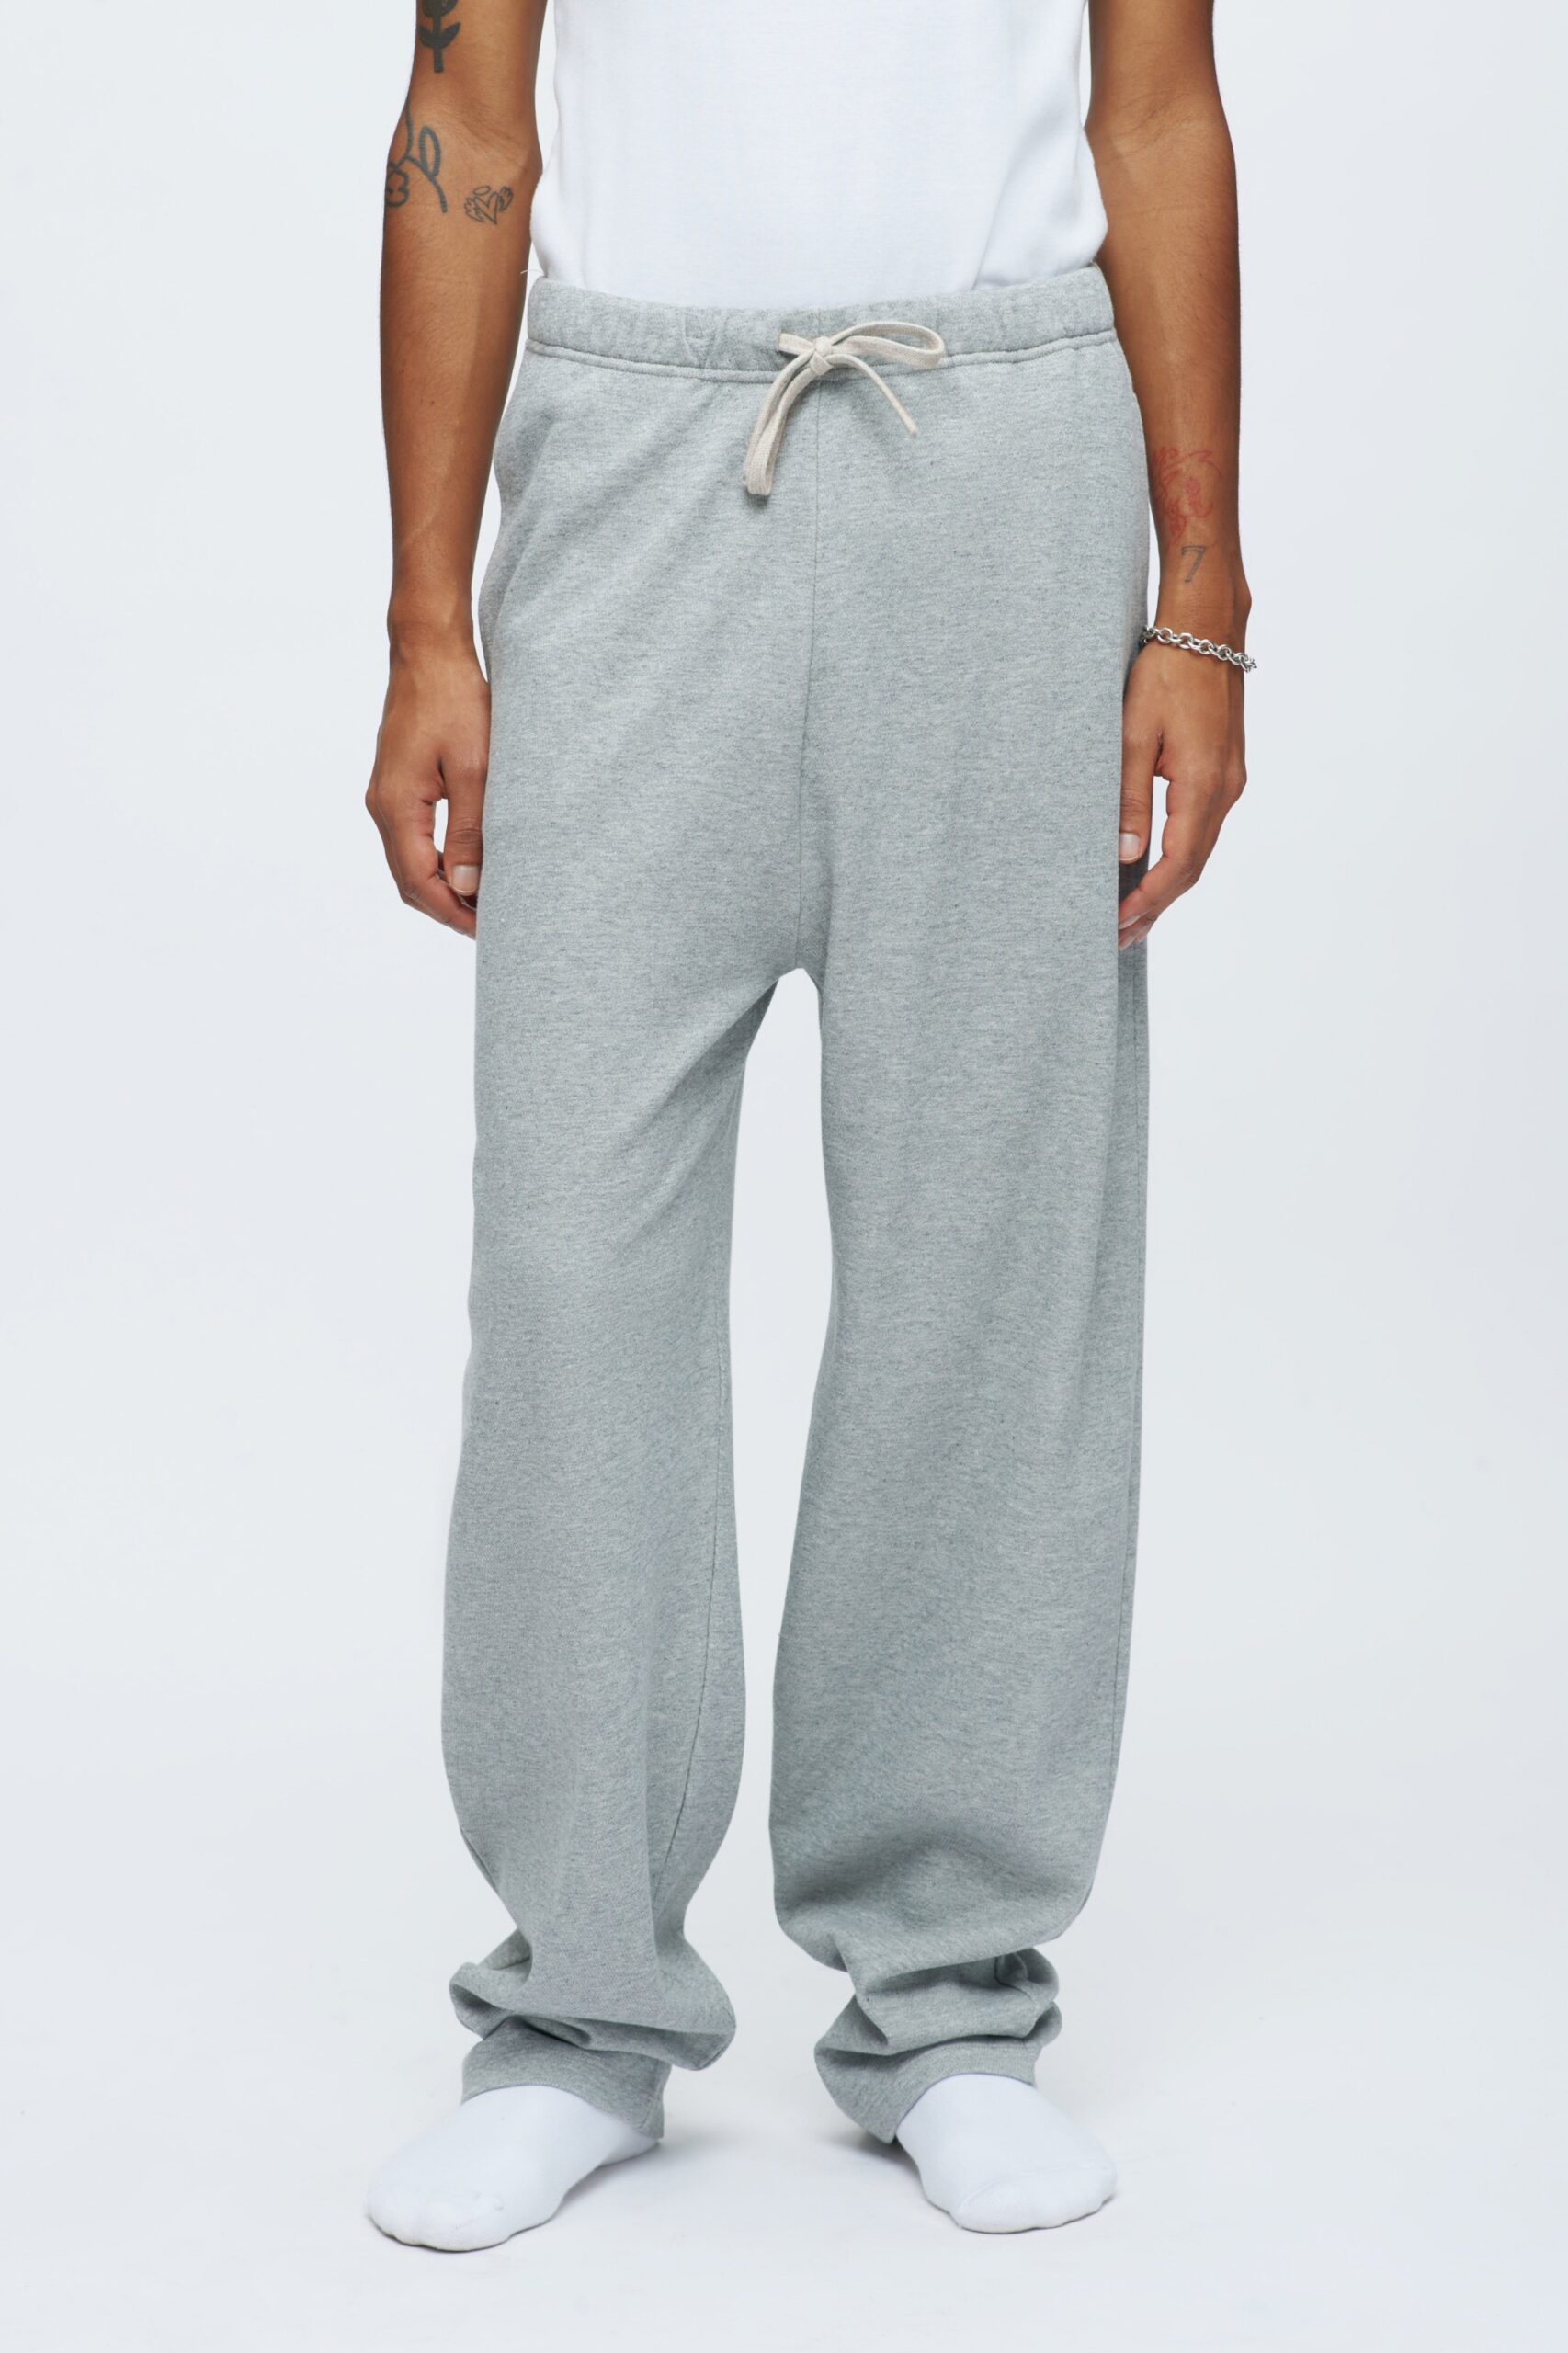 Kotn Men&#8217;s Double Knit Pyjama Bottom in Heather Grey , 100% Egyptian Cotton